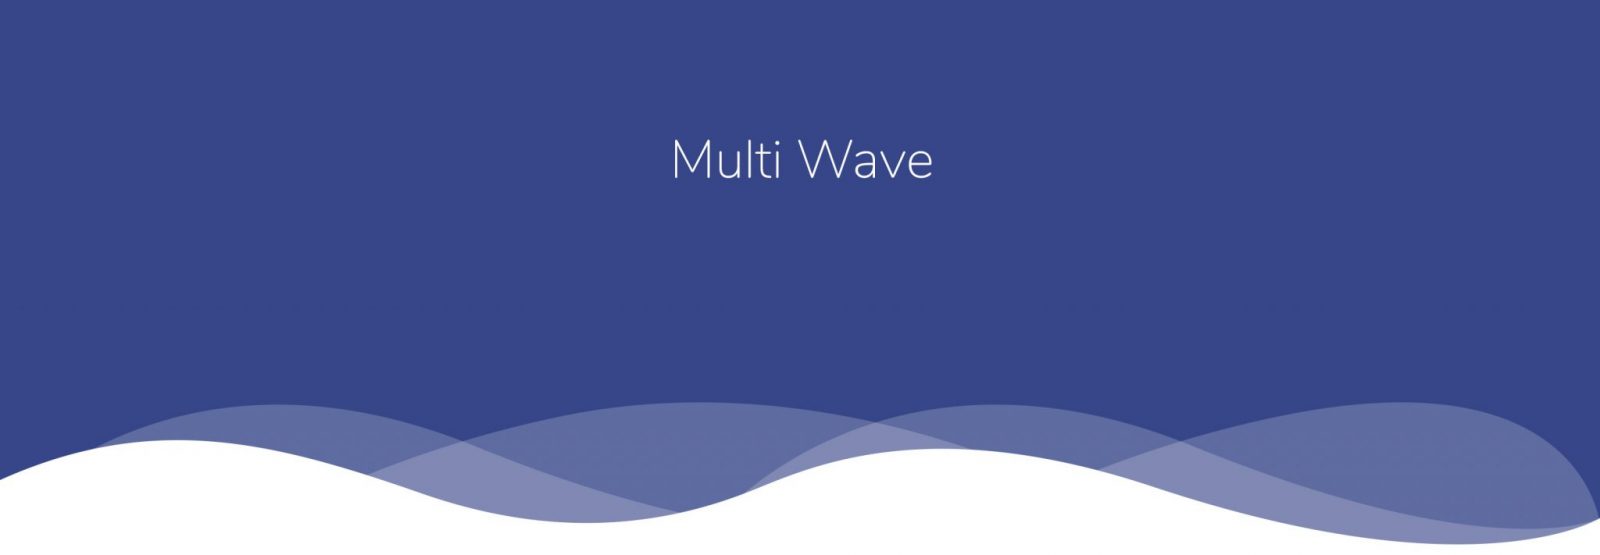 multi wave scaled